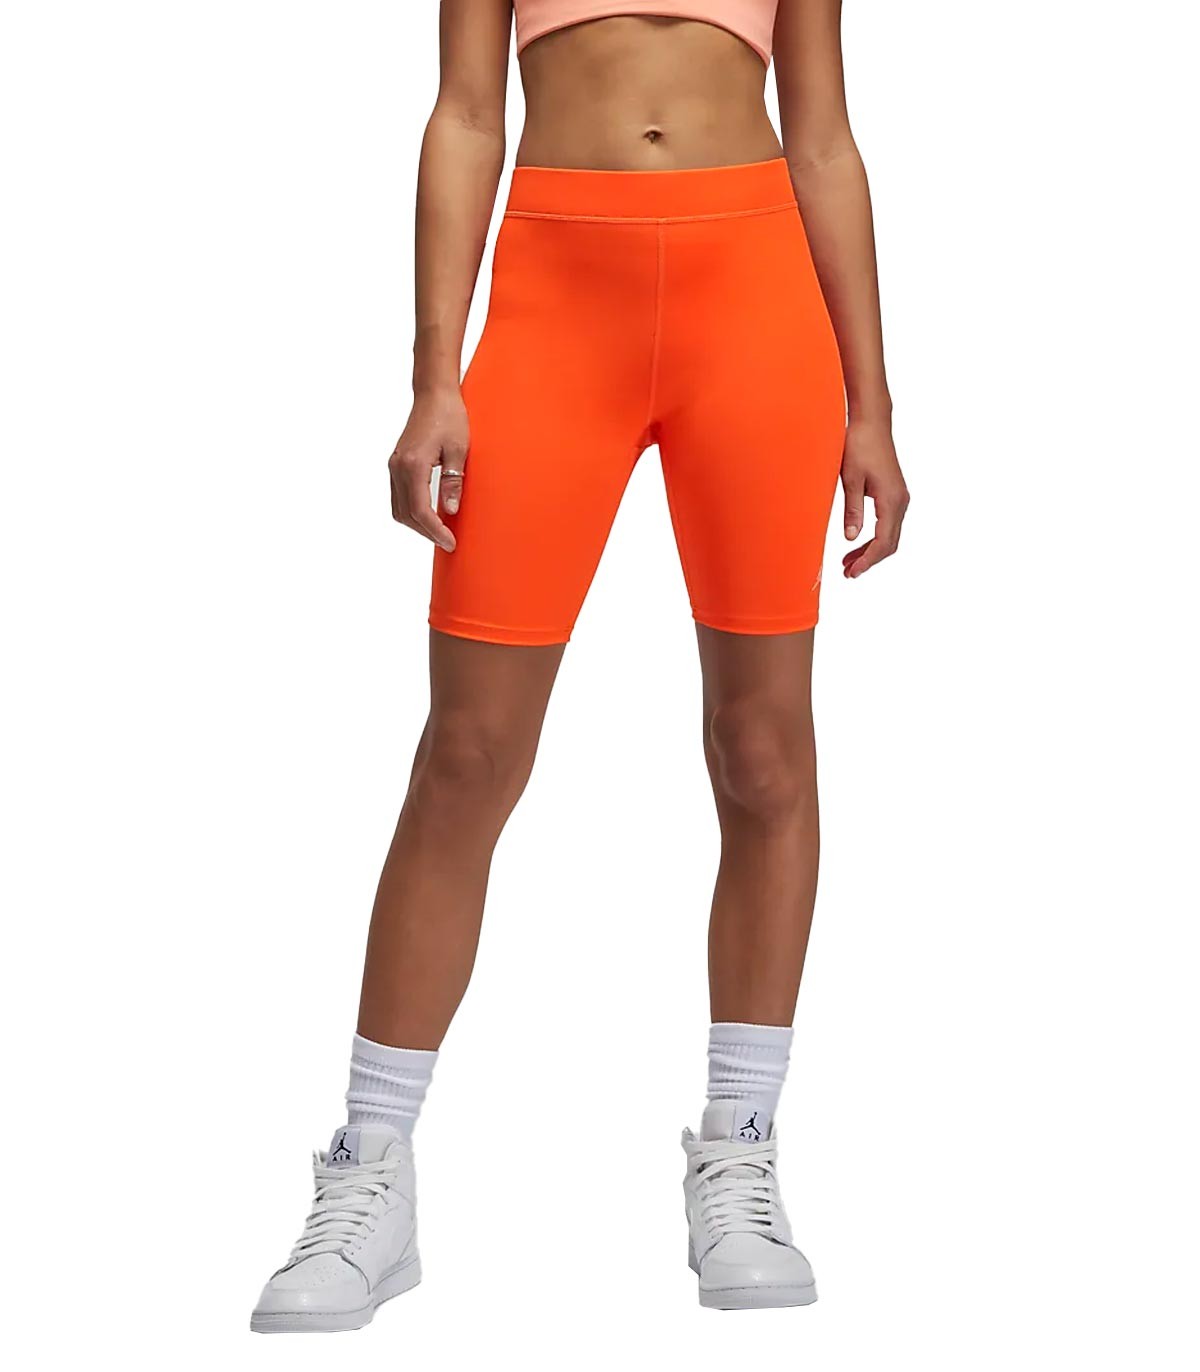 Jordan - Leggins Corto con Logo - Naranja